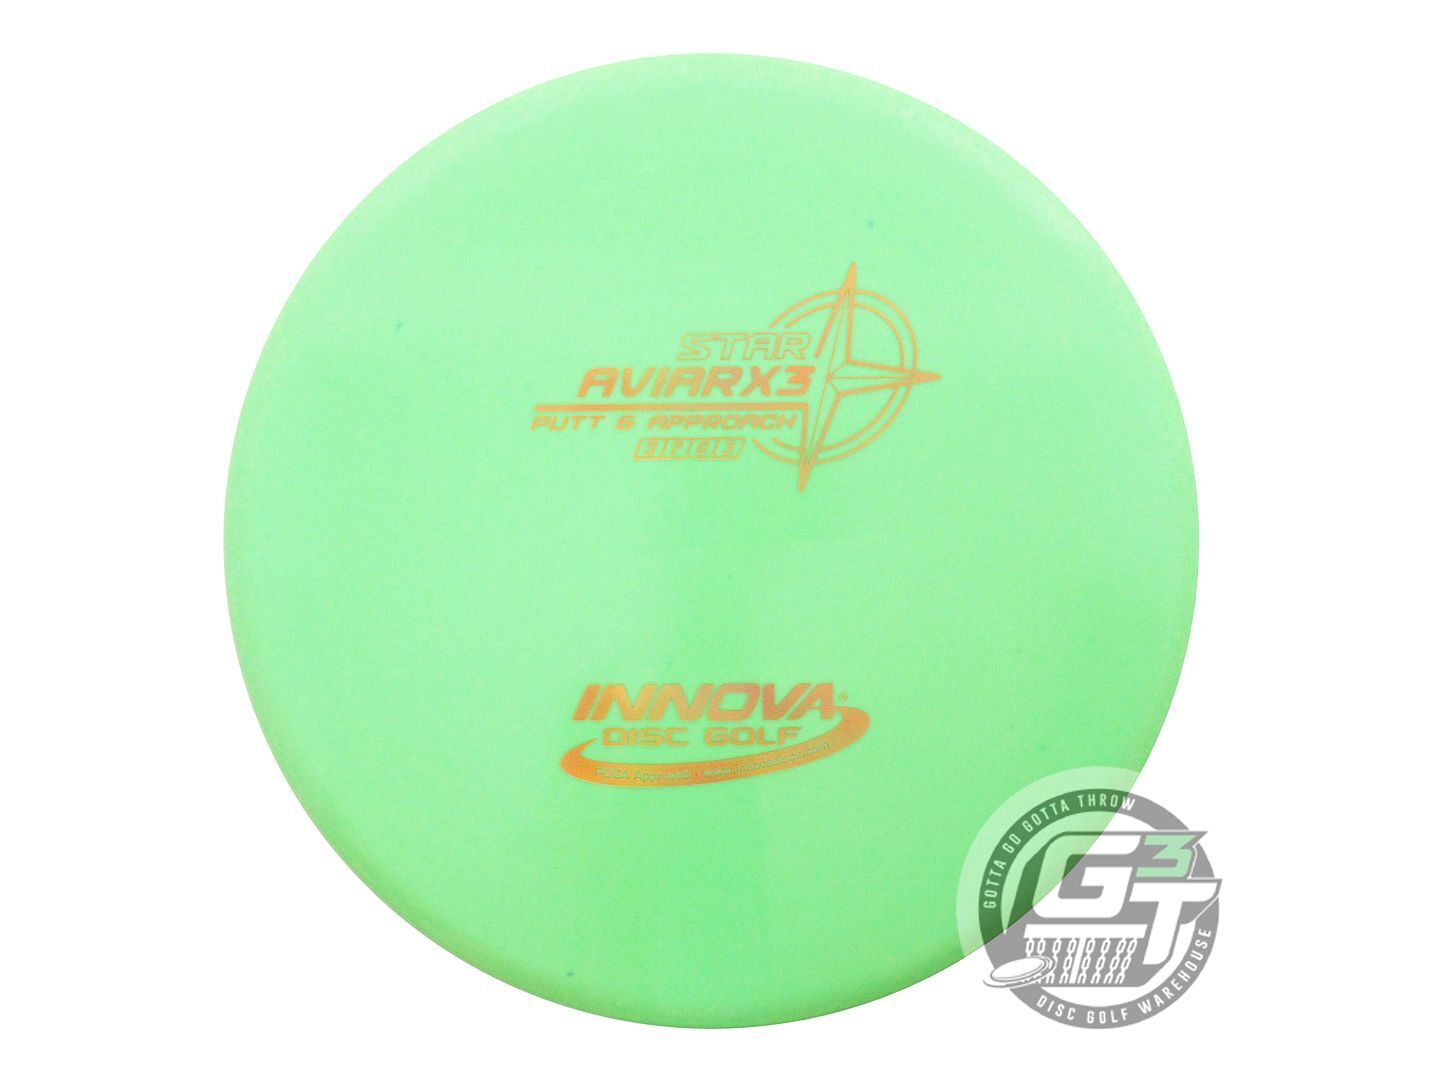 Innova Star AviarX3 Putter Golf Disc (Individually Listed)